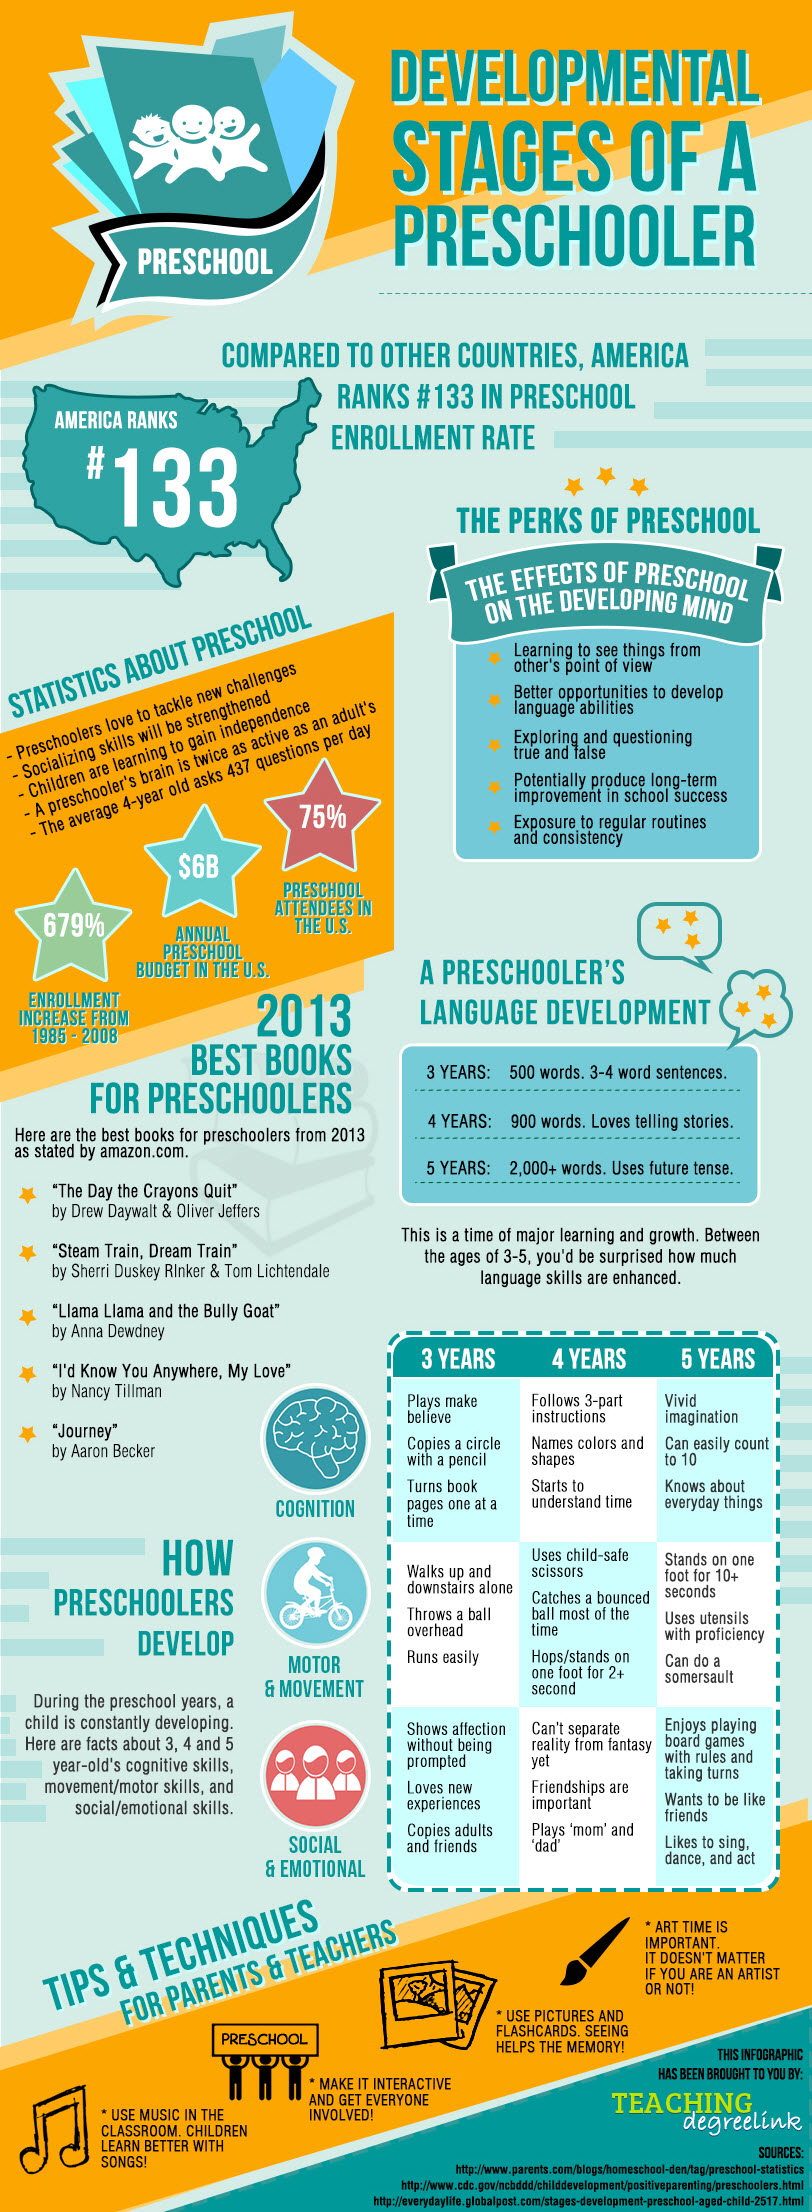 The Developmental Stages of a Preschooler